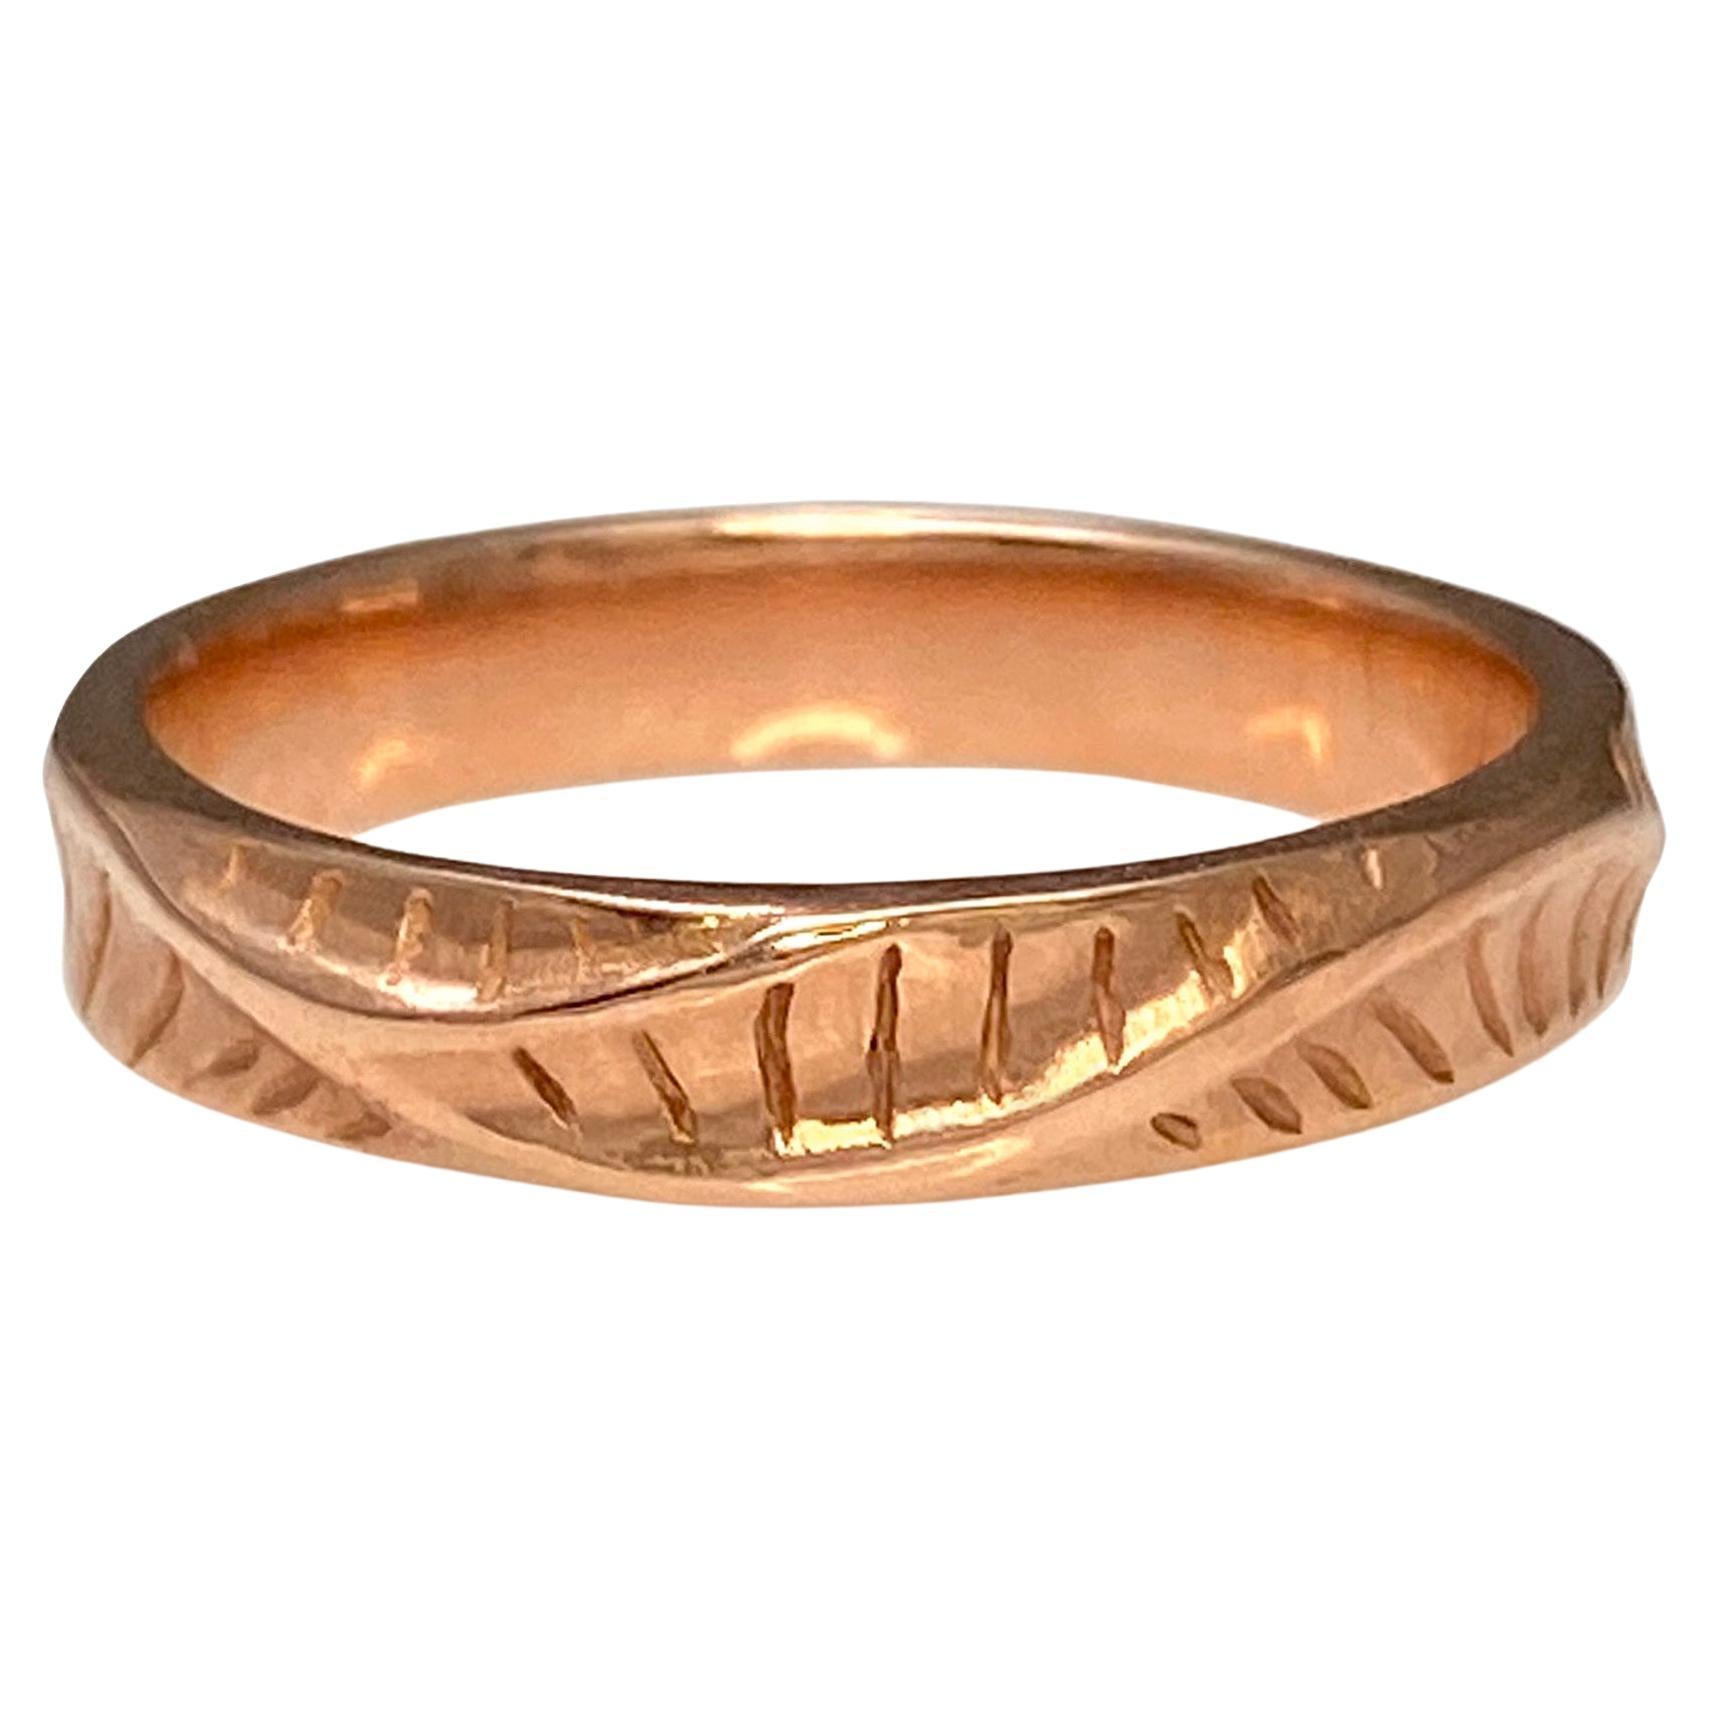 18 Karat Roségold Ahorn-Muster-Ring von K.MITA - Großformat